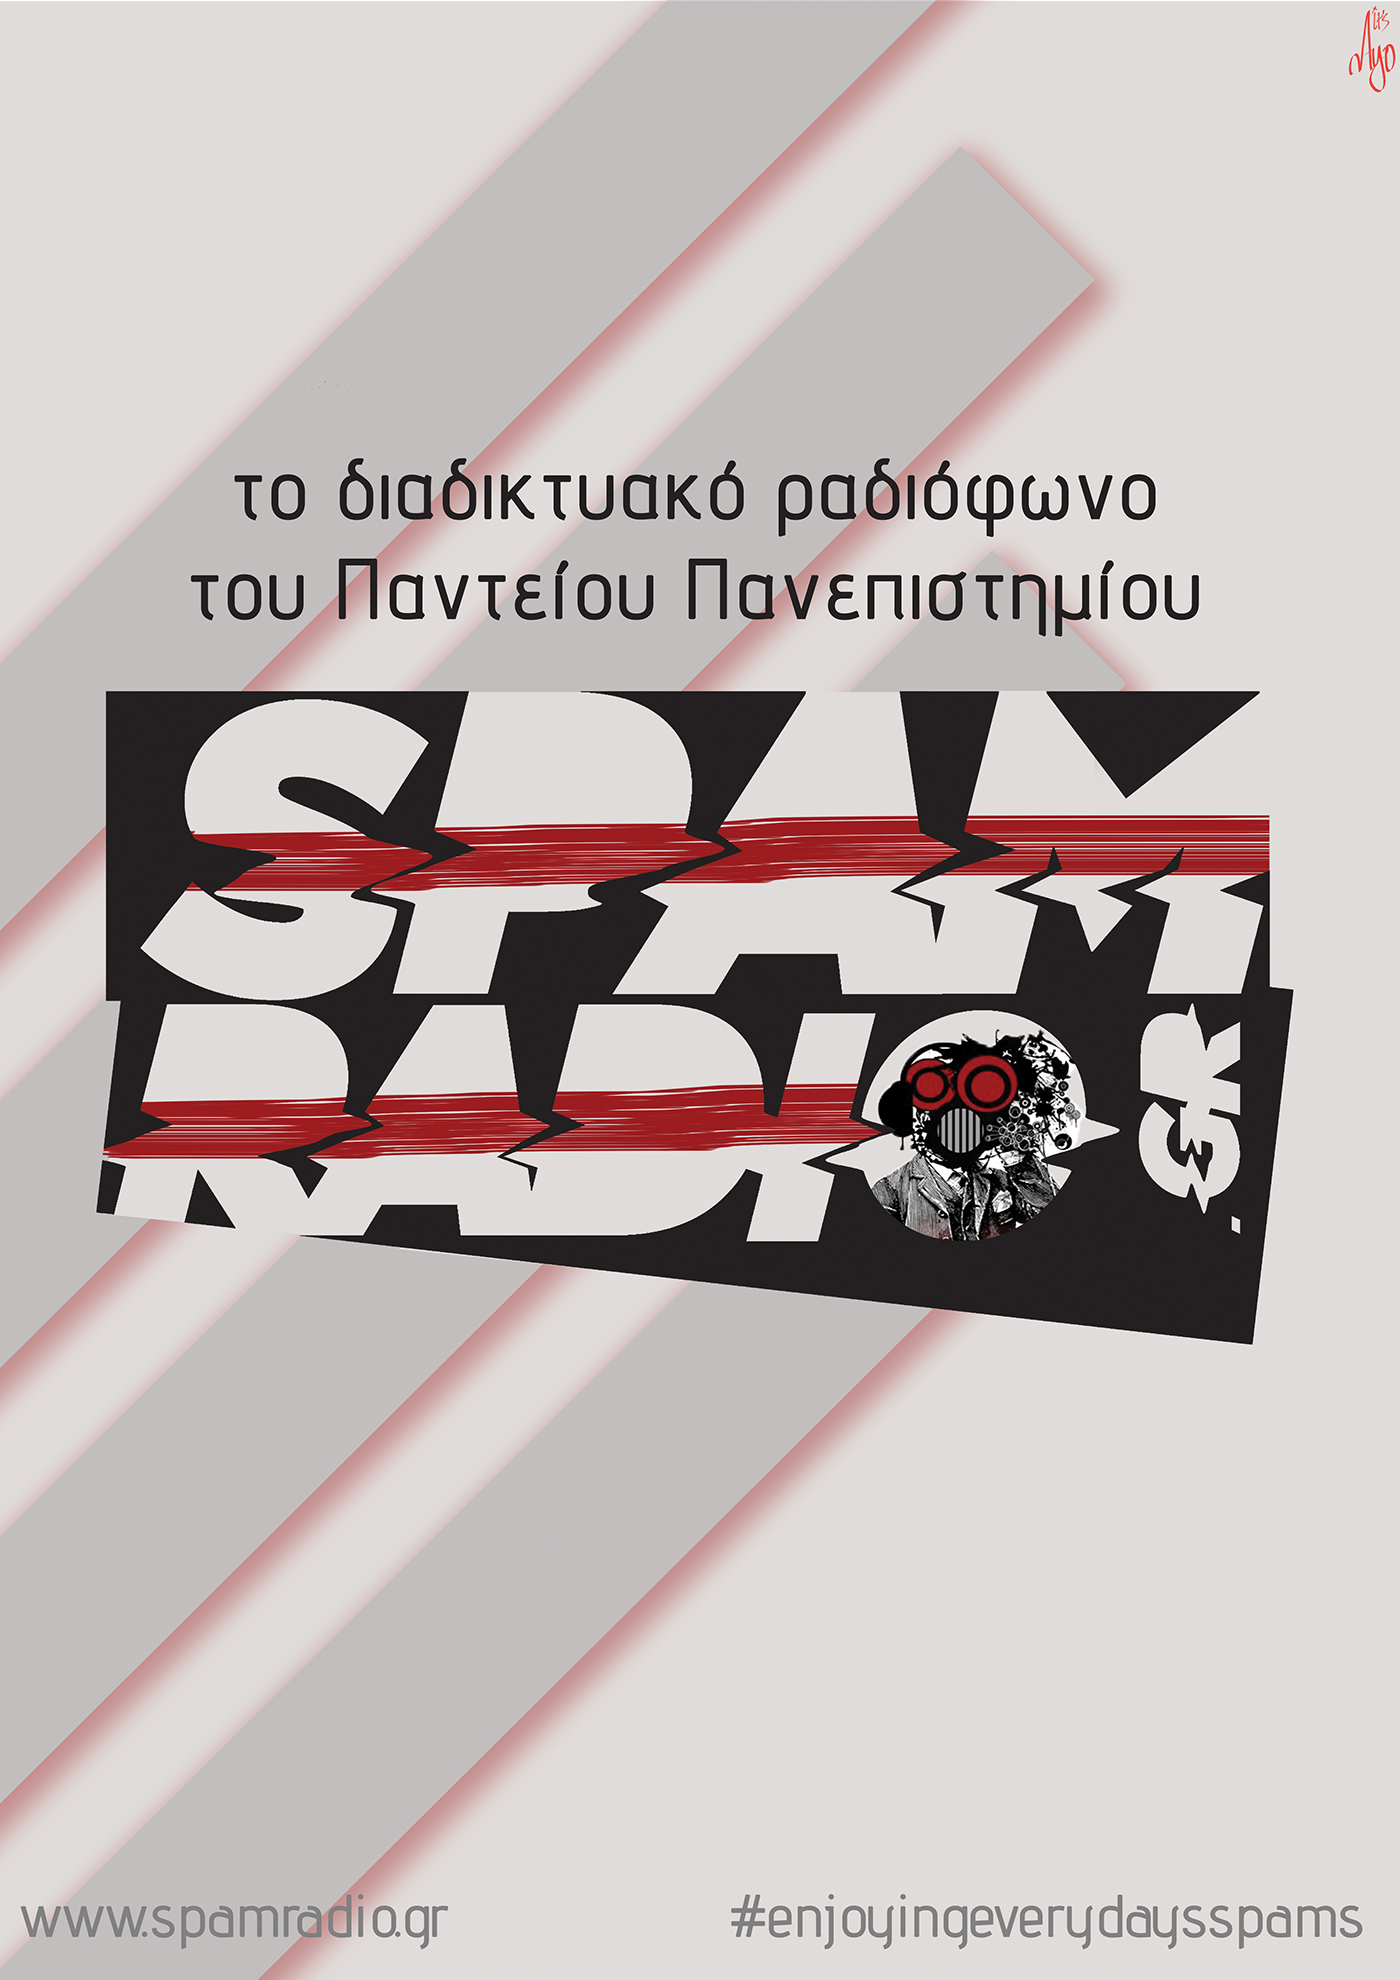 logo webradio Greece